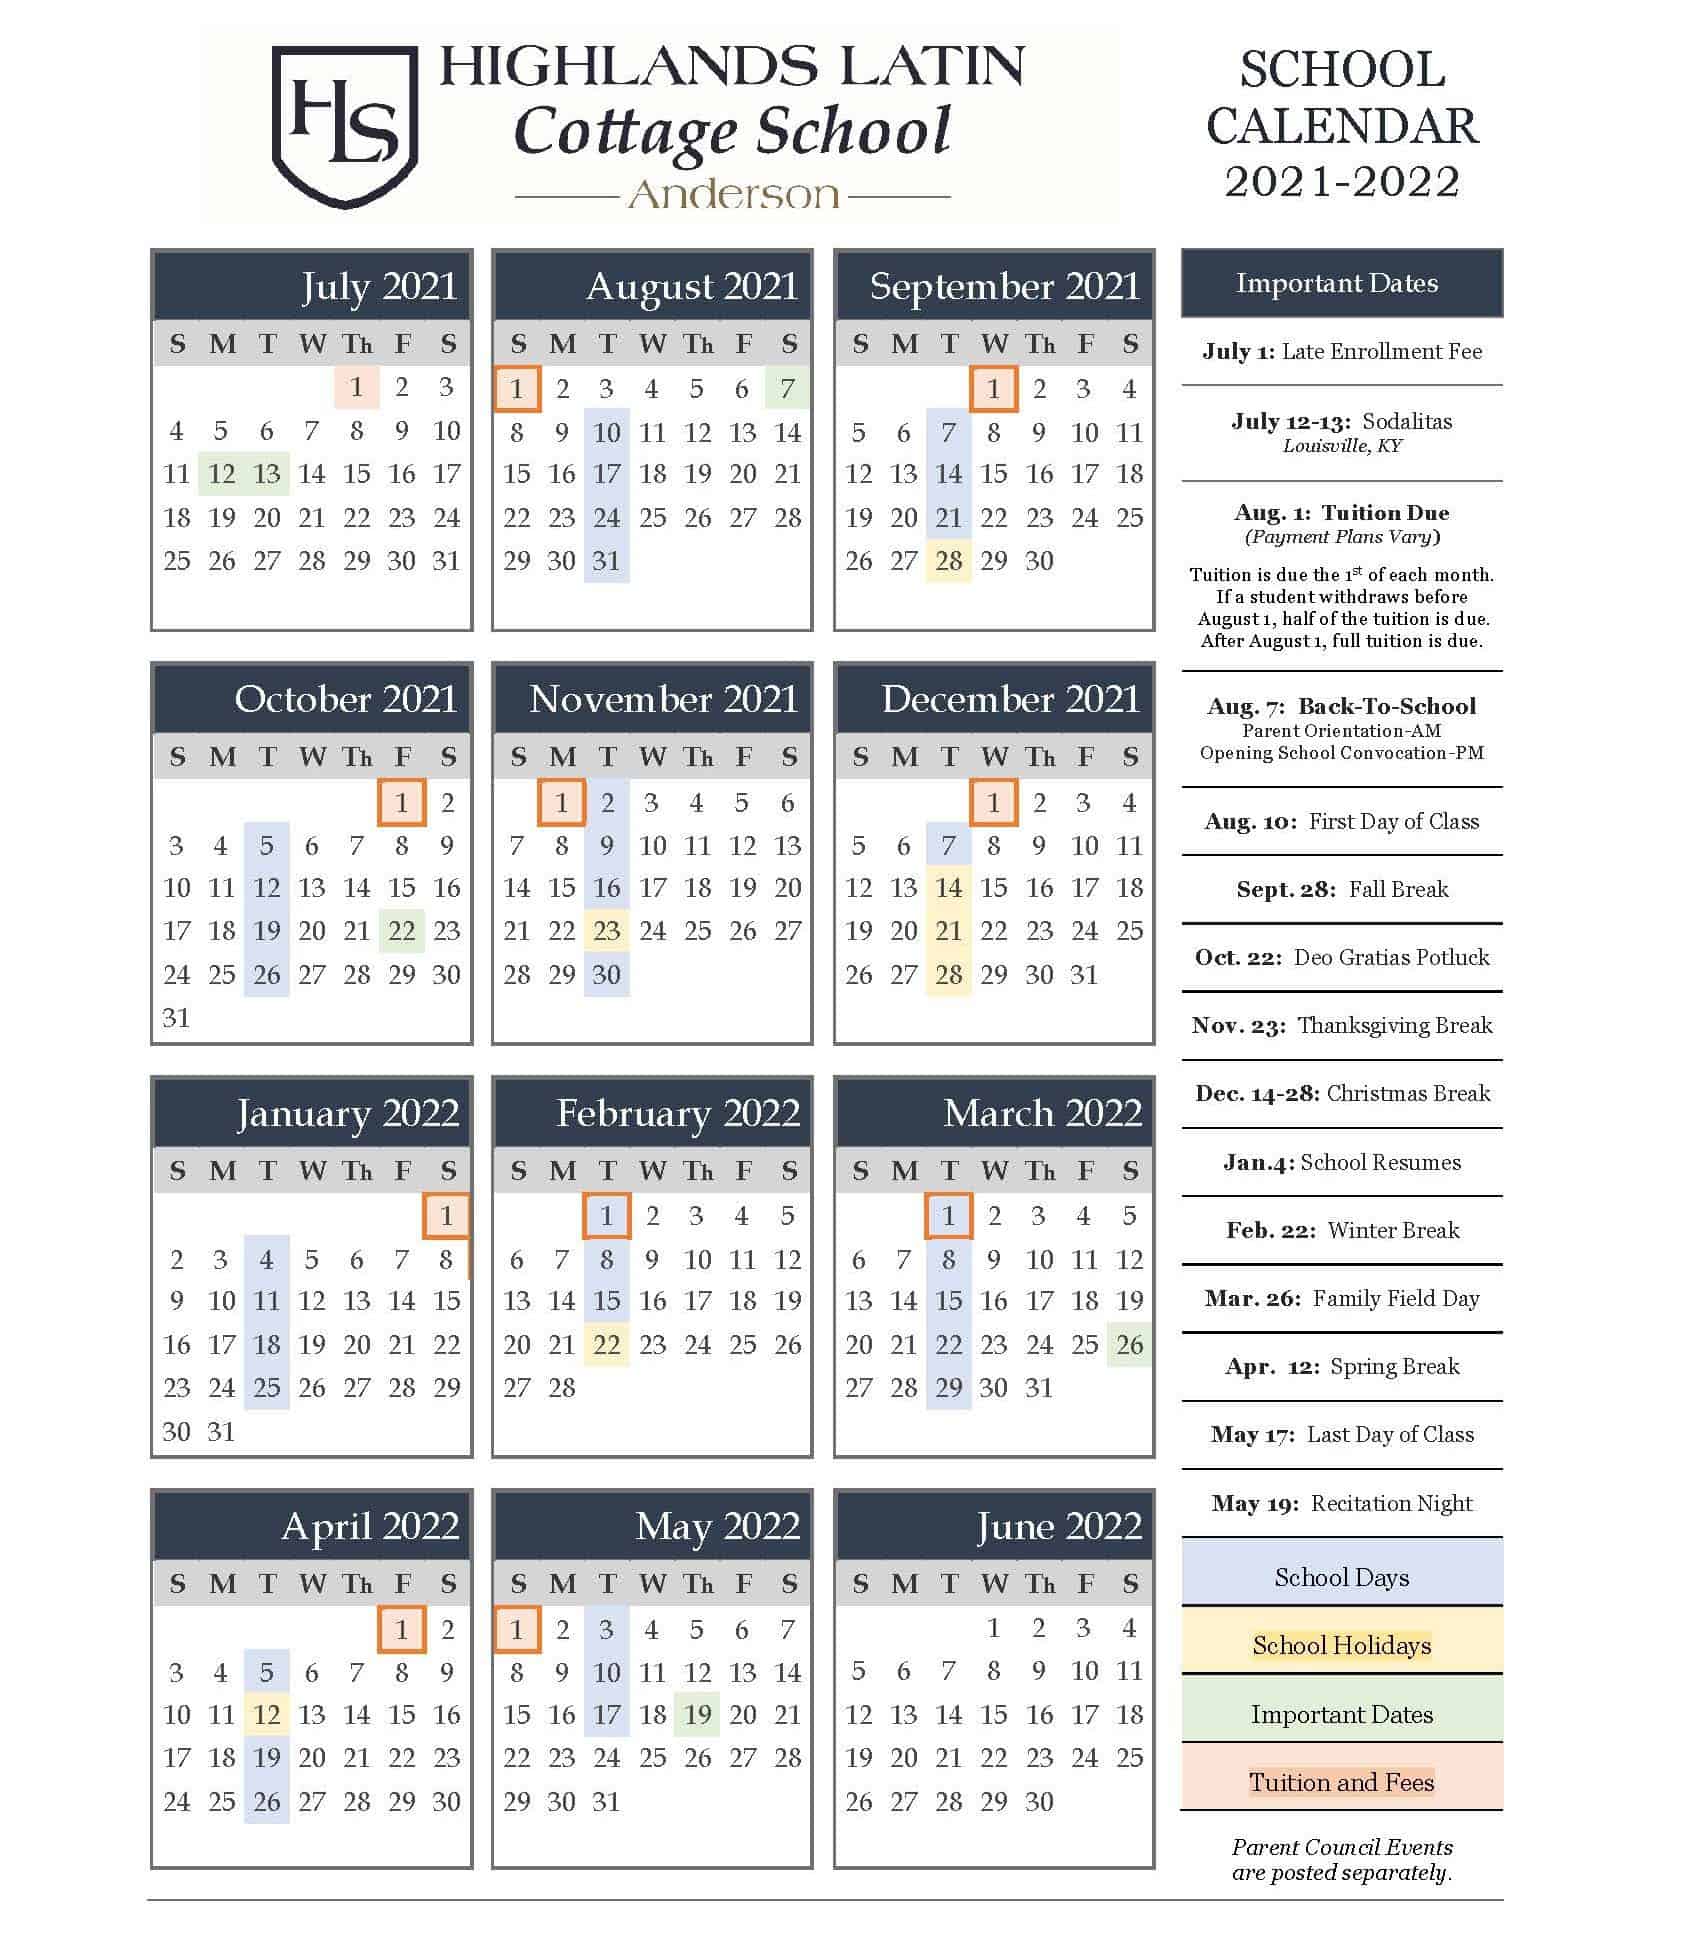 HLS Highlands Latin Cottage School Anderson 2021 2022 School Calendar